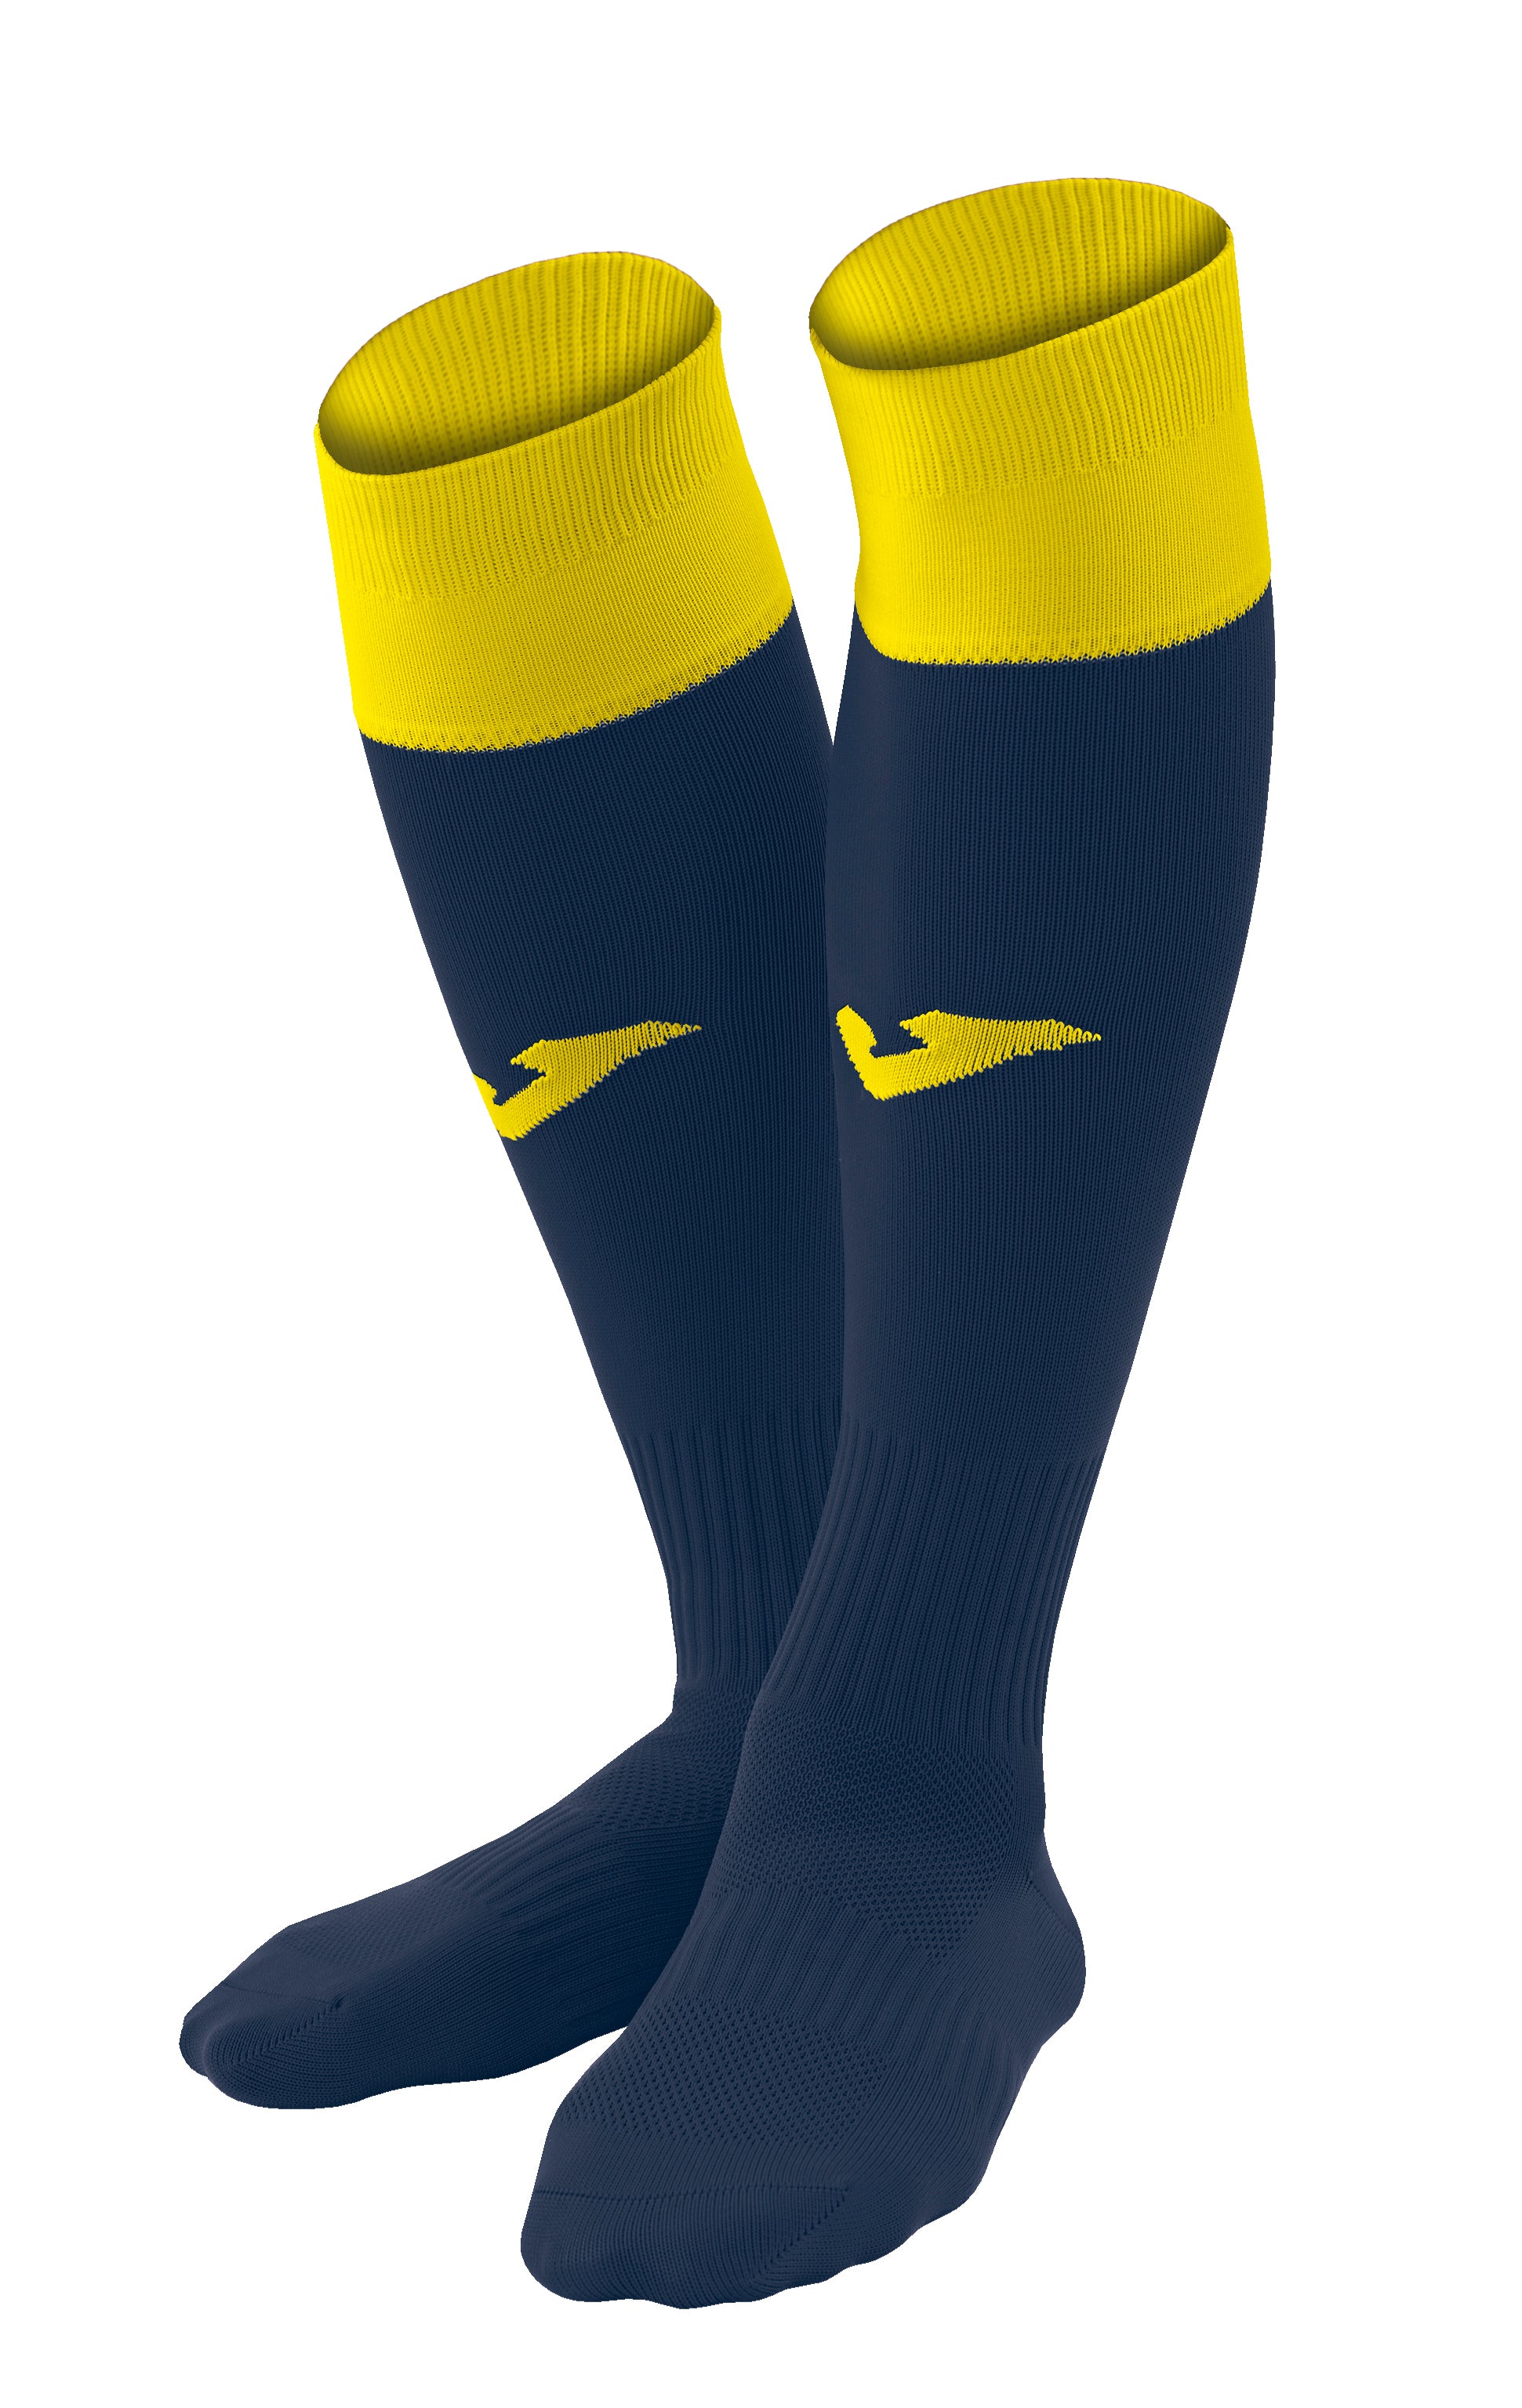 Joma Calcio 24 Sock - Dark Navy/Yellow